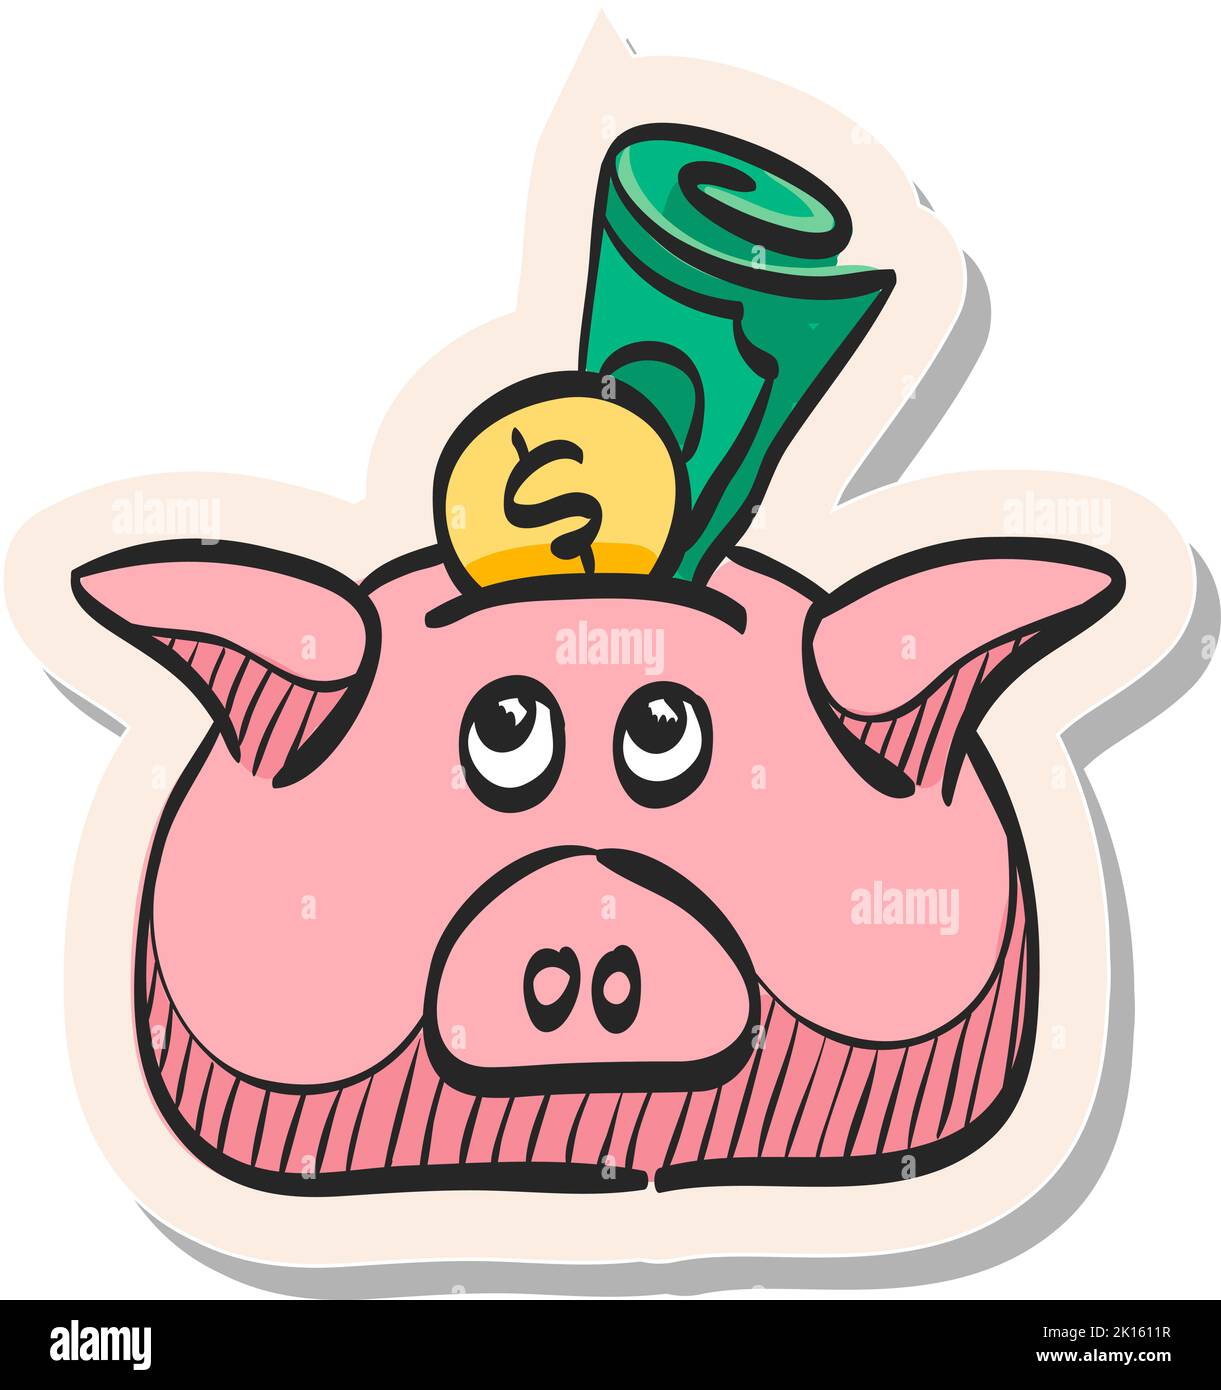 Cartoon Finance & Money Stickers Stock Vector - Illustration of